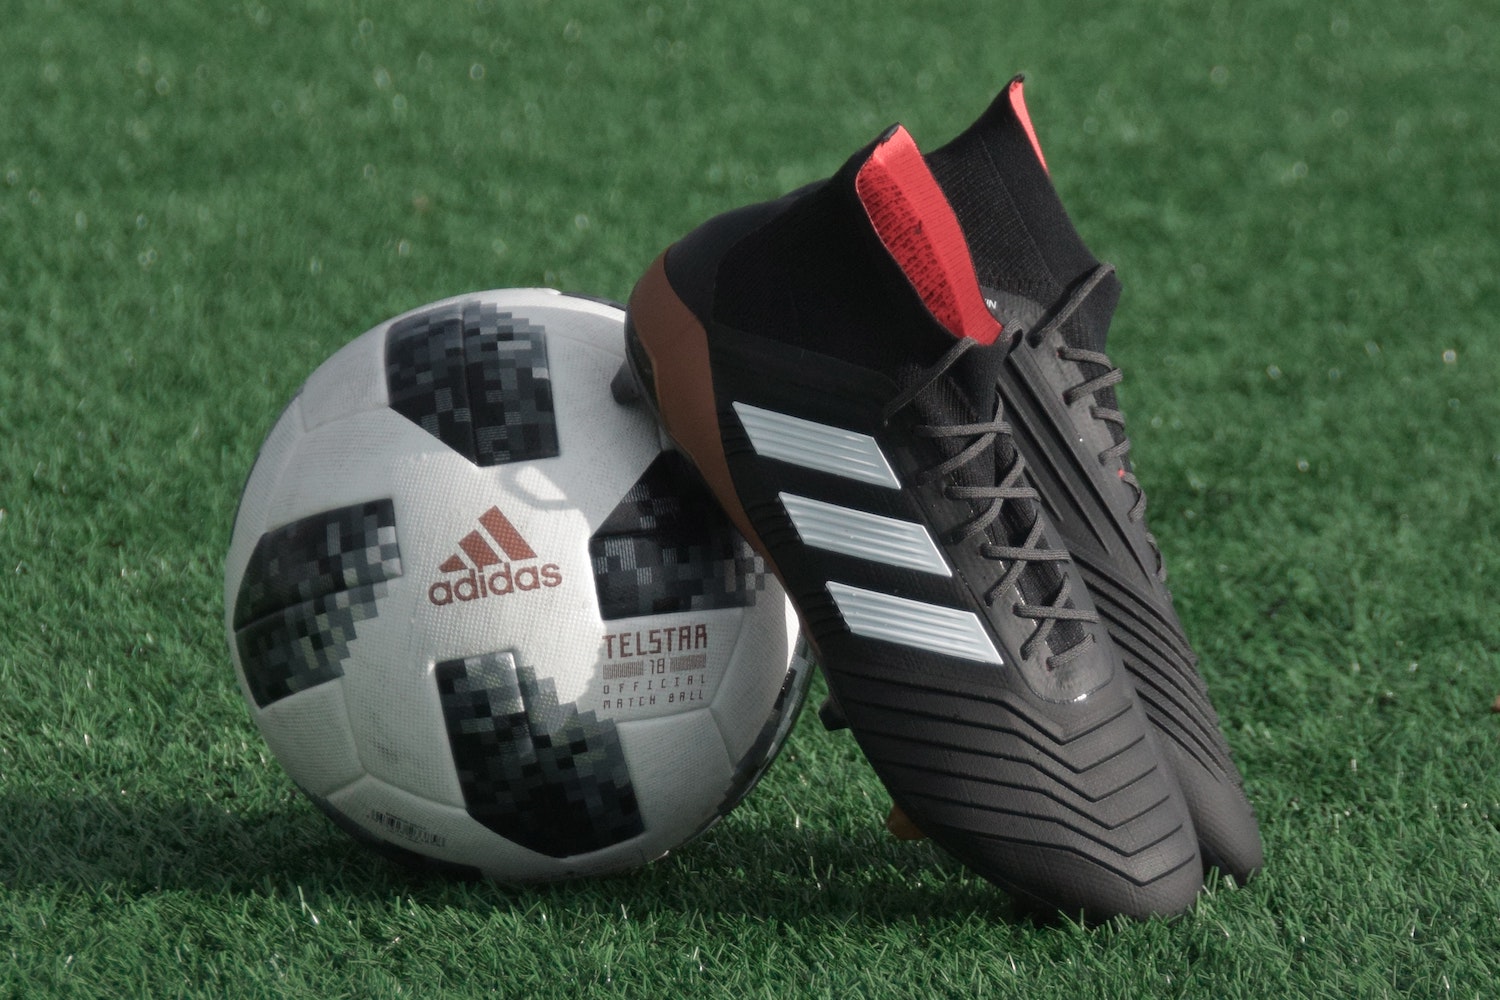 A pair of Adidas soccer cleats lean against a soccer ball.